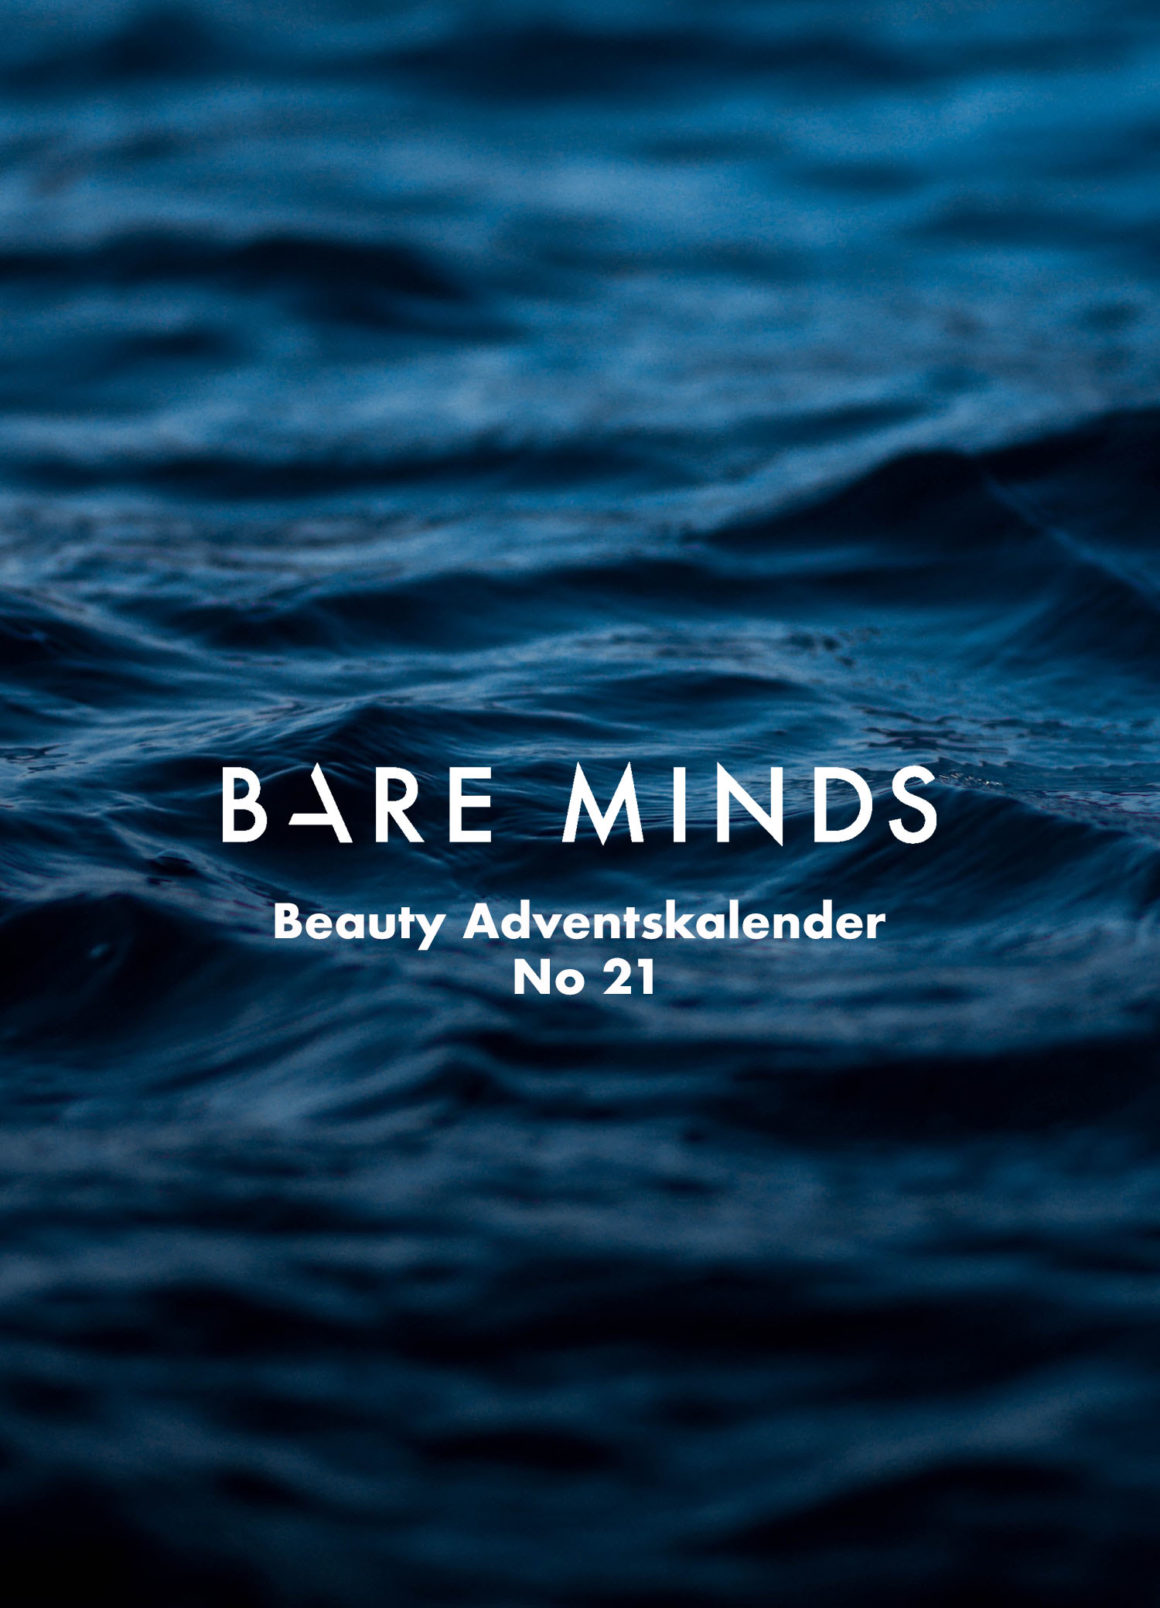 Bare Minds Beauty Adventskalender imleedh-ali-677414-unsplash